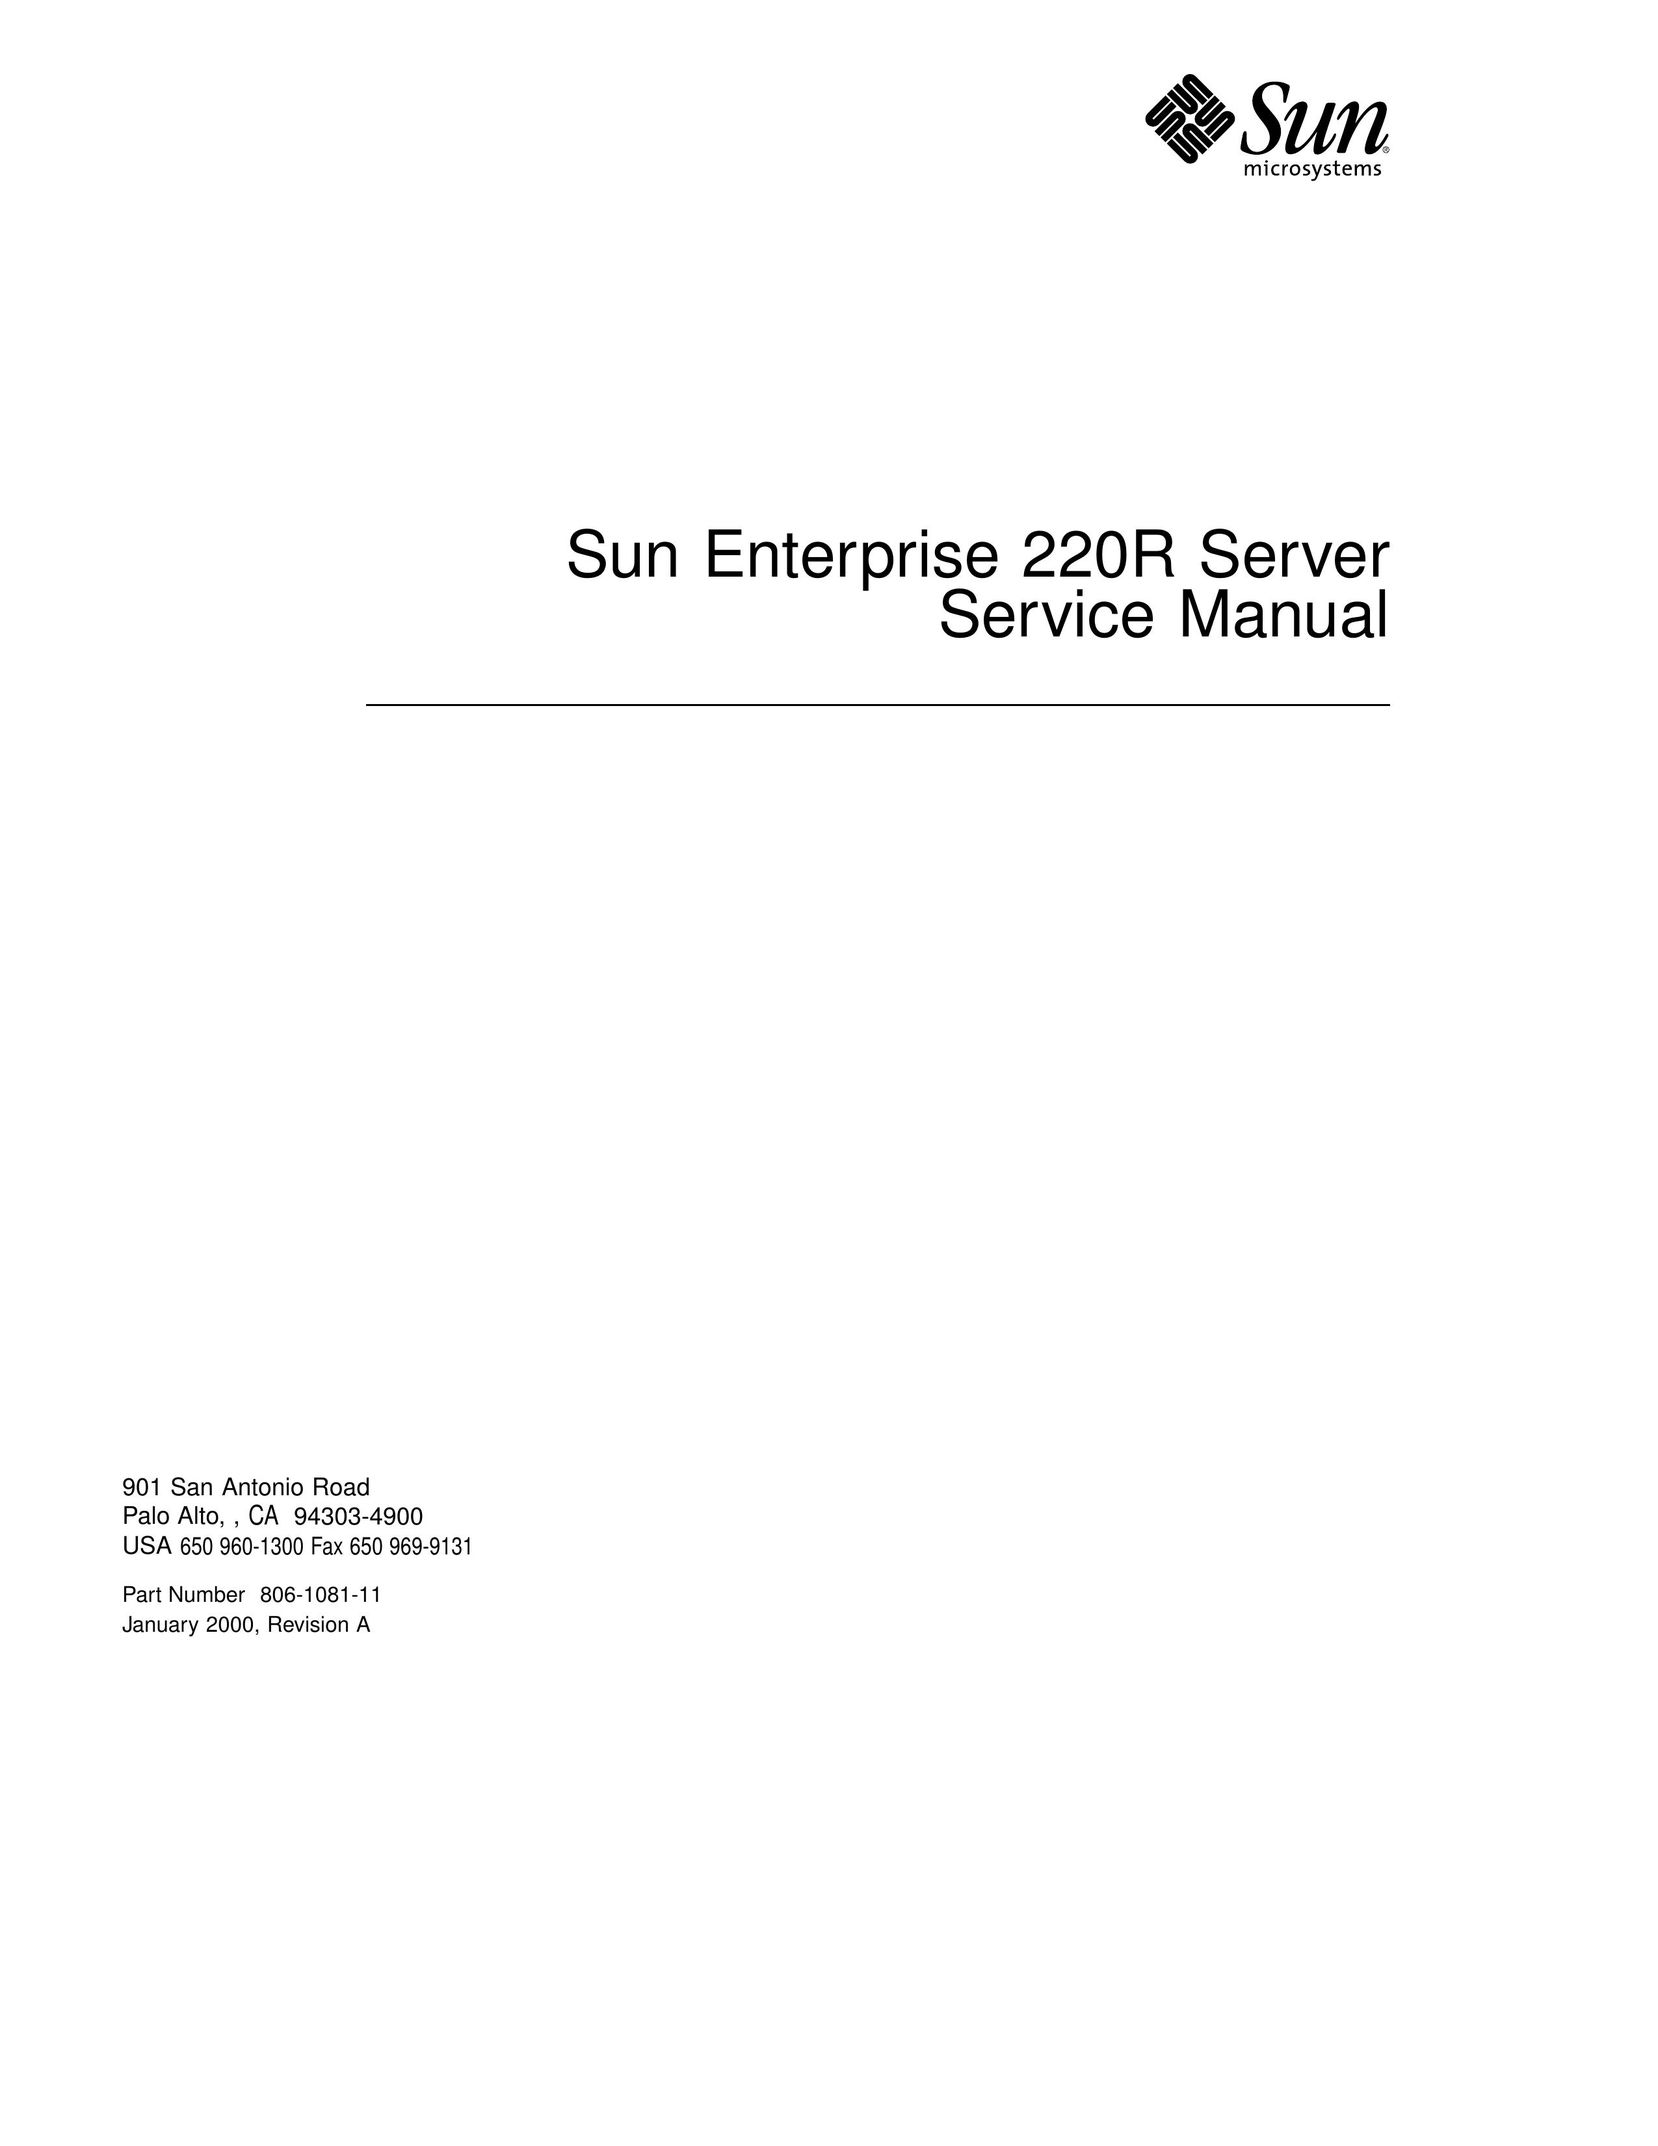 Sun Microsystems 220R Server User Manual